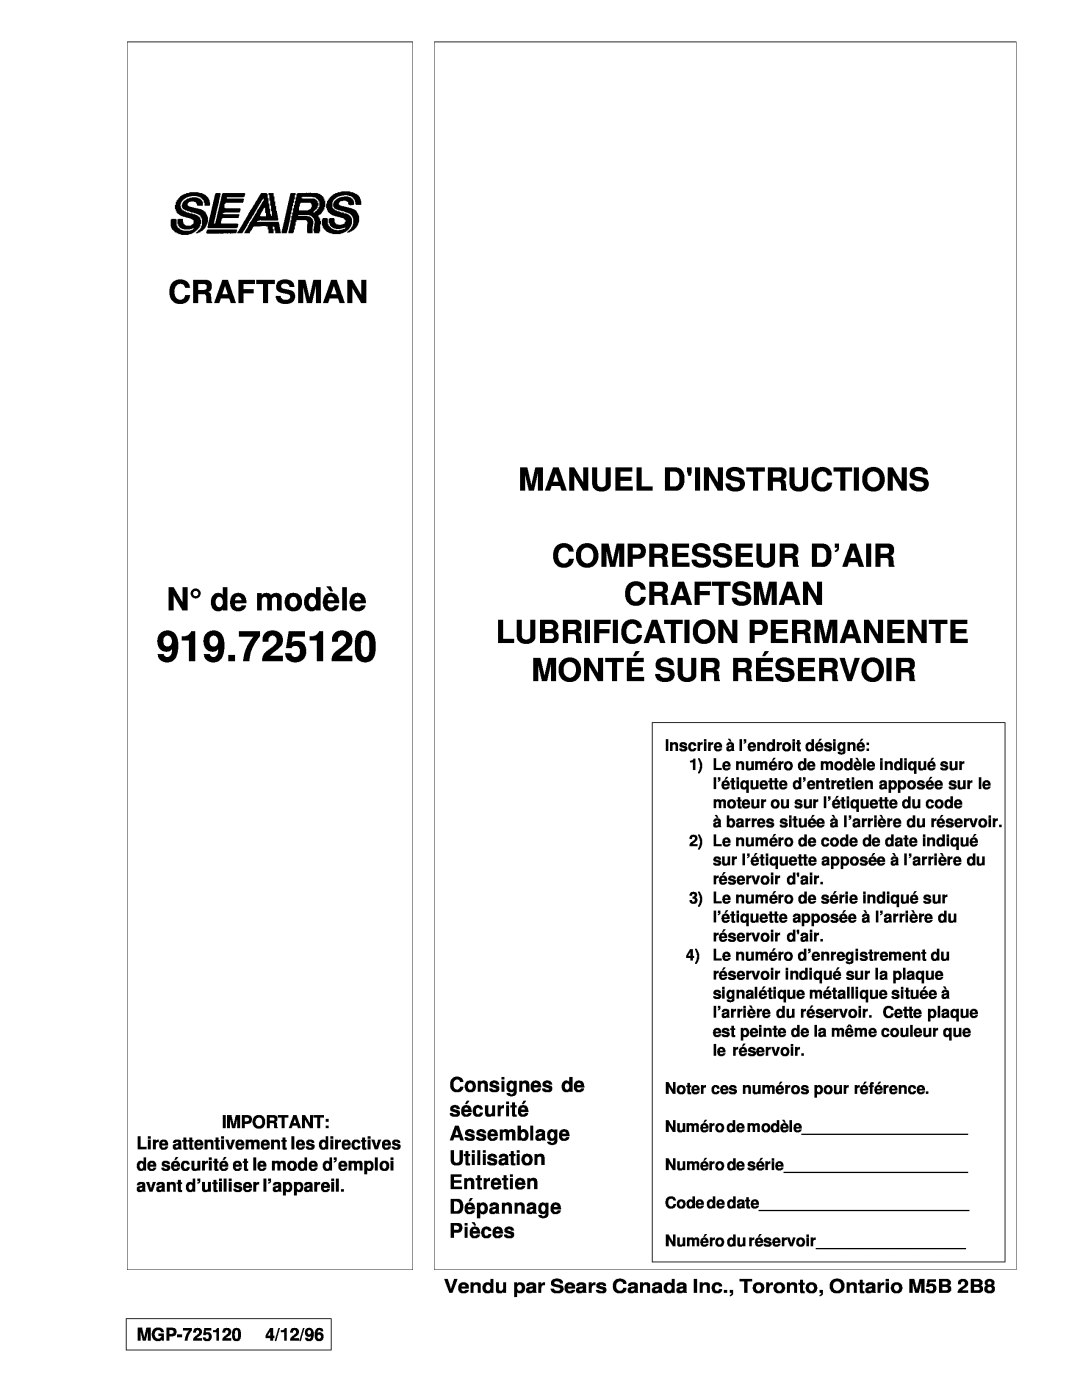 Sears 919.725120, CRAFTSMAN N de modèle, Manuel Dinstructions Compresseur D’Air Craftsman, MGP-725120 4/12/96 